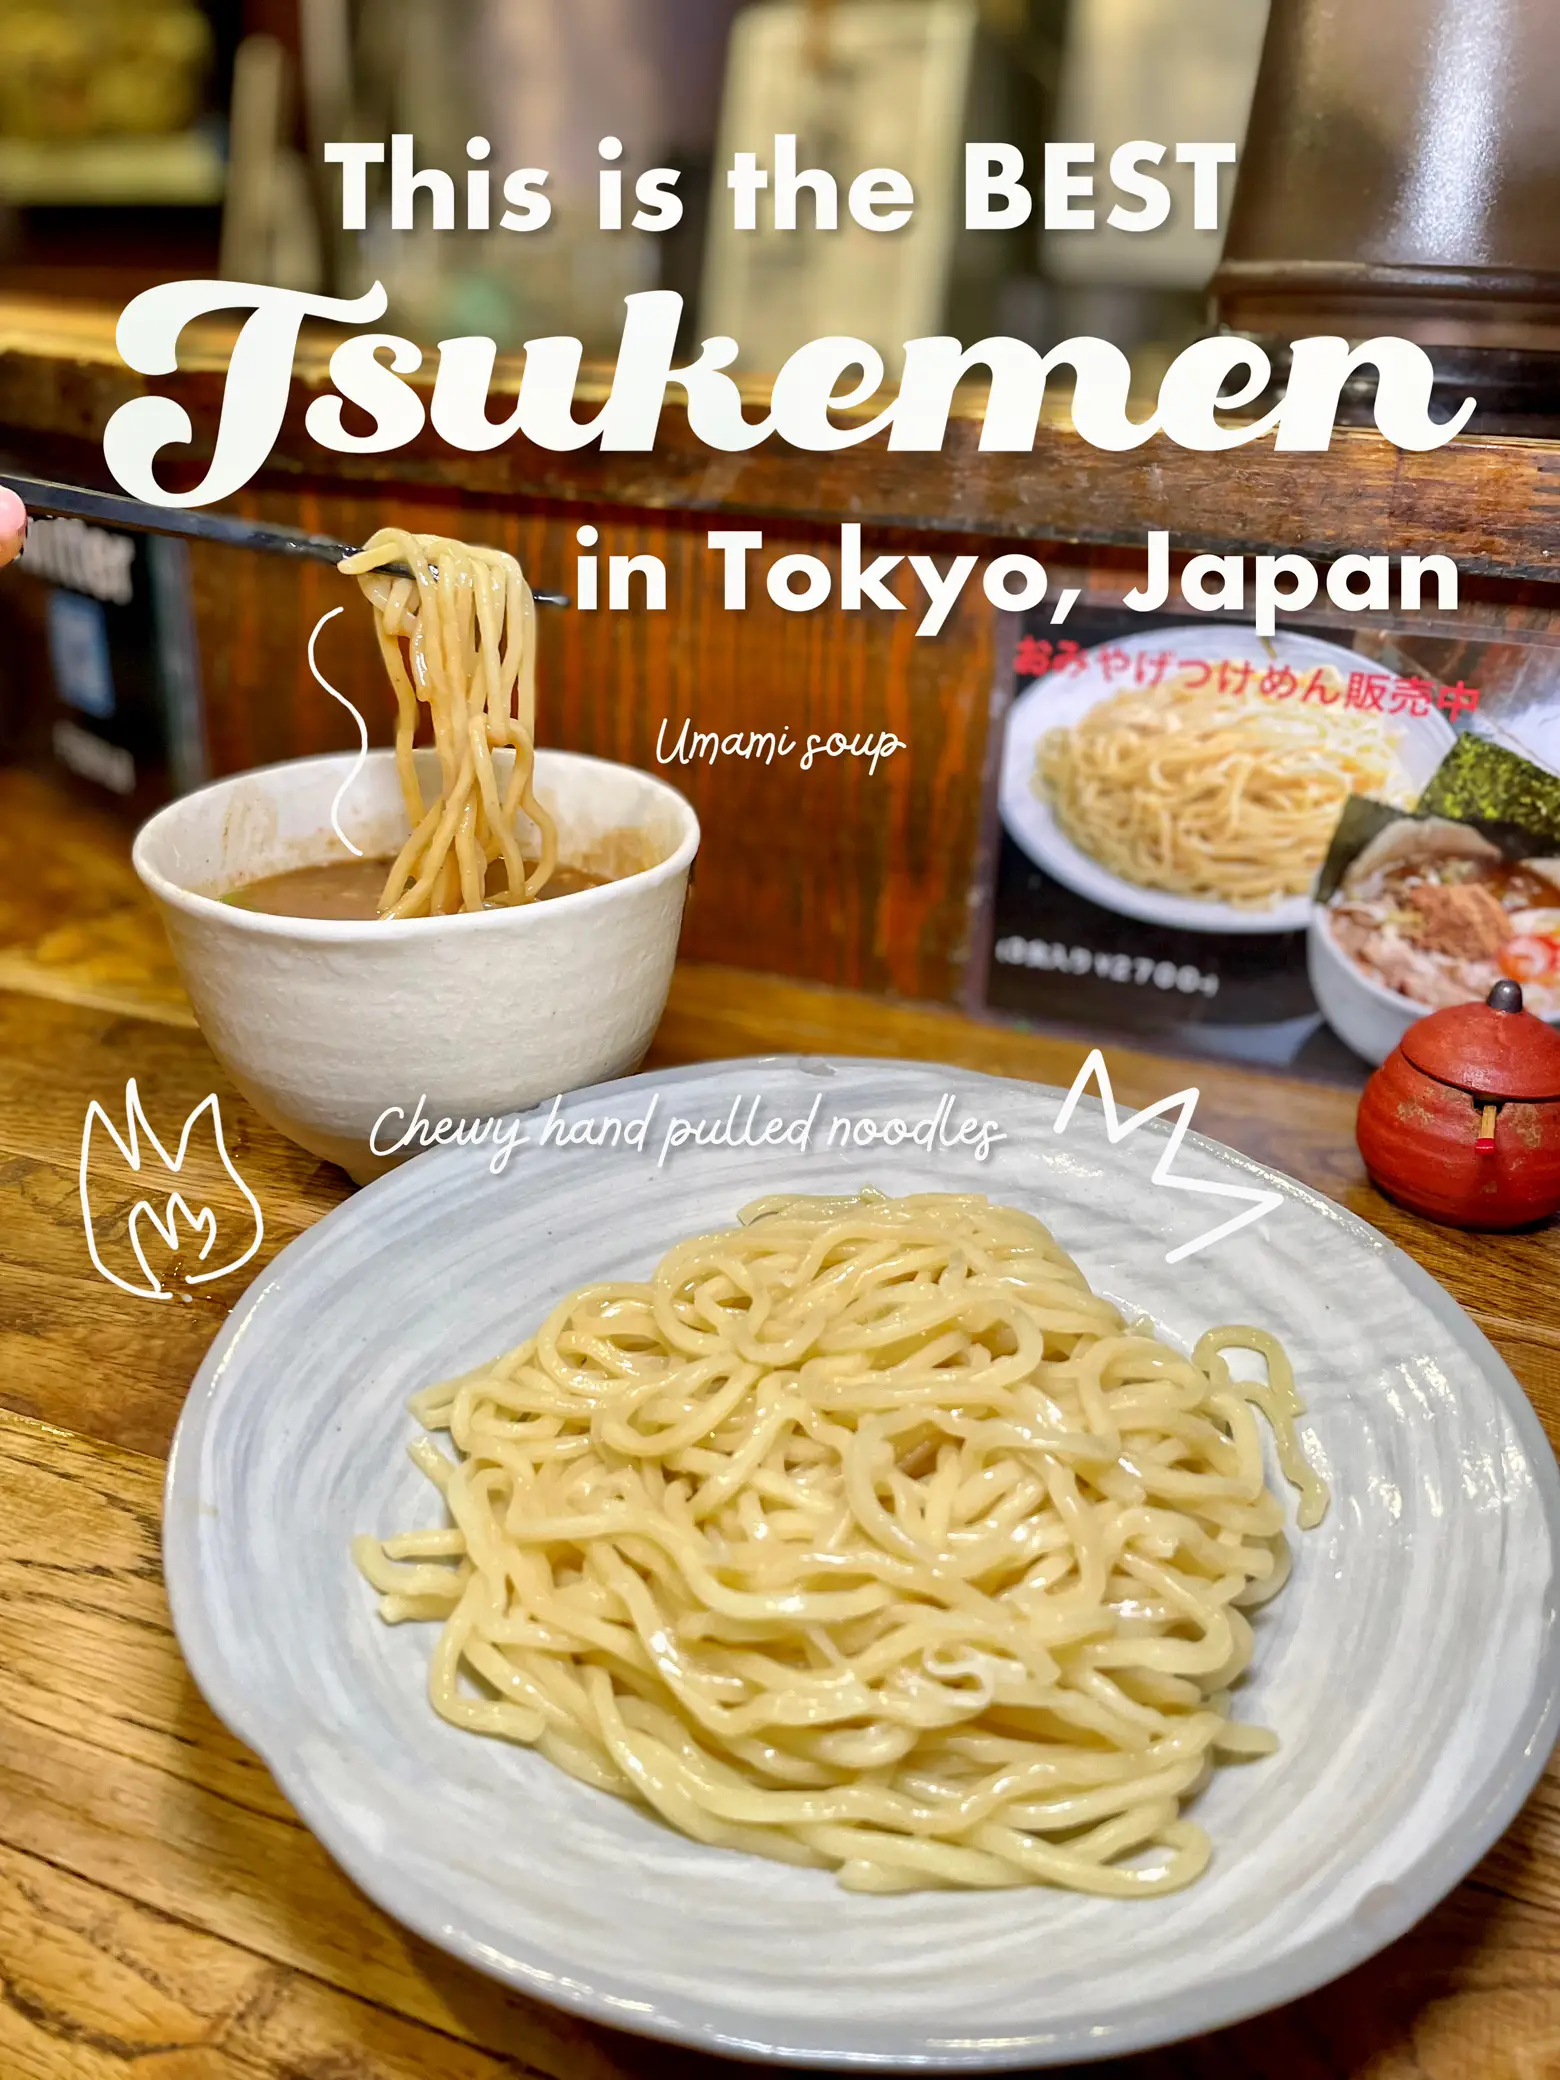 Tsukemen - Wikipedia